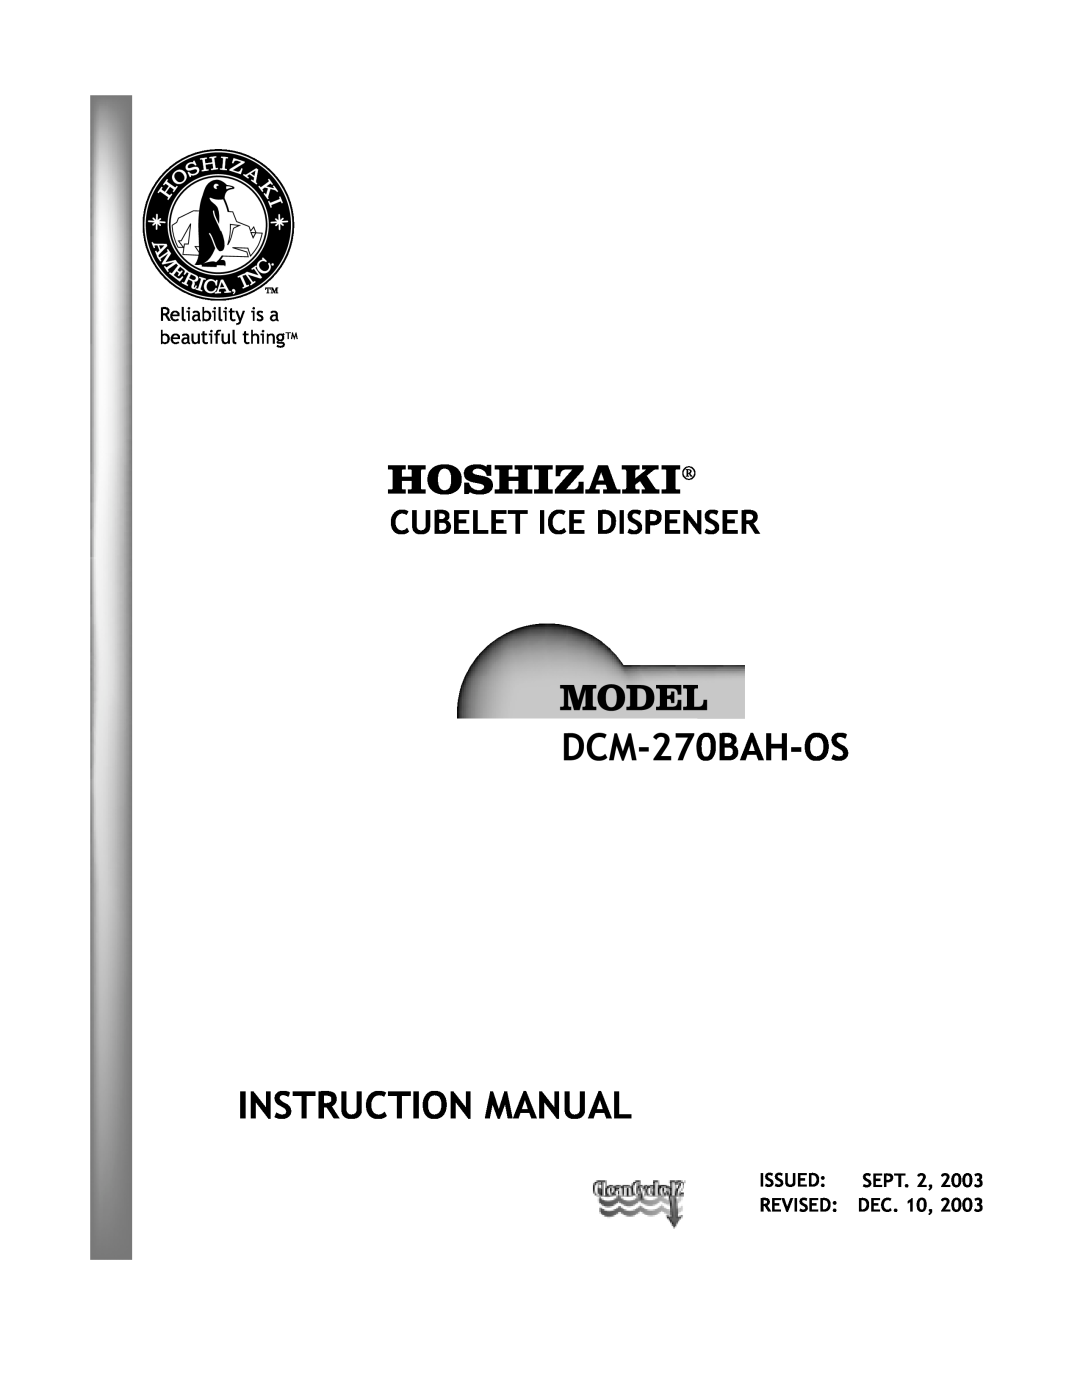 Hoshizaki manual Model DCM-270BAH-OS PARTS LIST, Cubelet Ice Dispenser, Reliability is a beautiful thingTM, Item # 